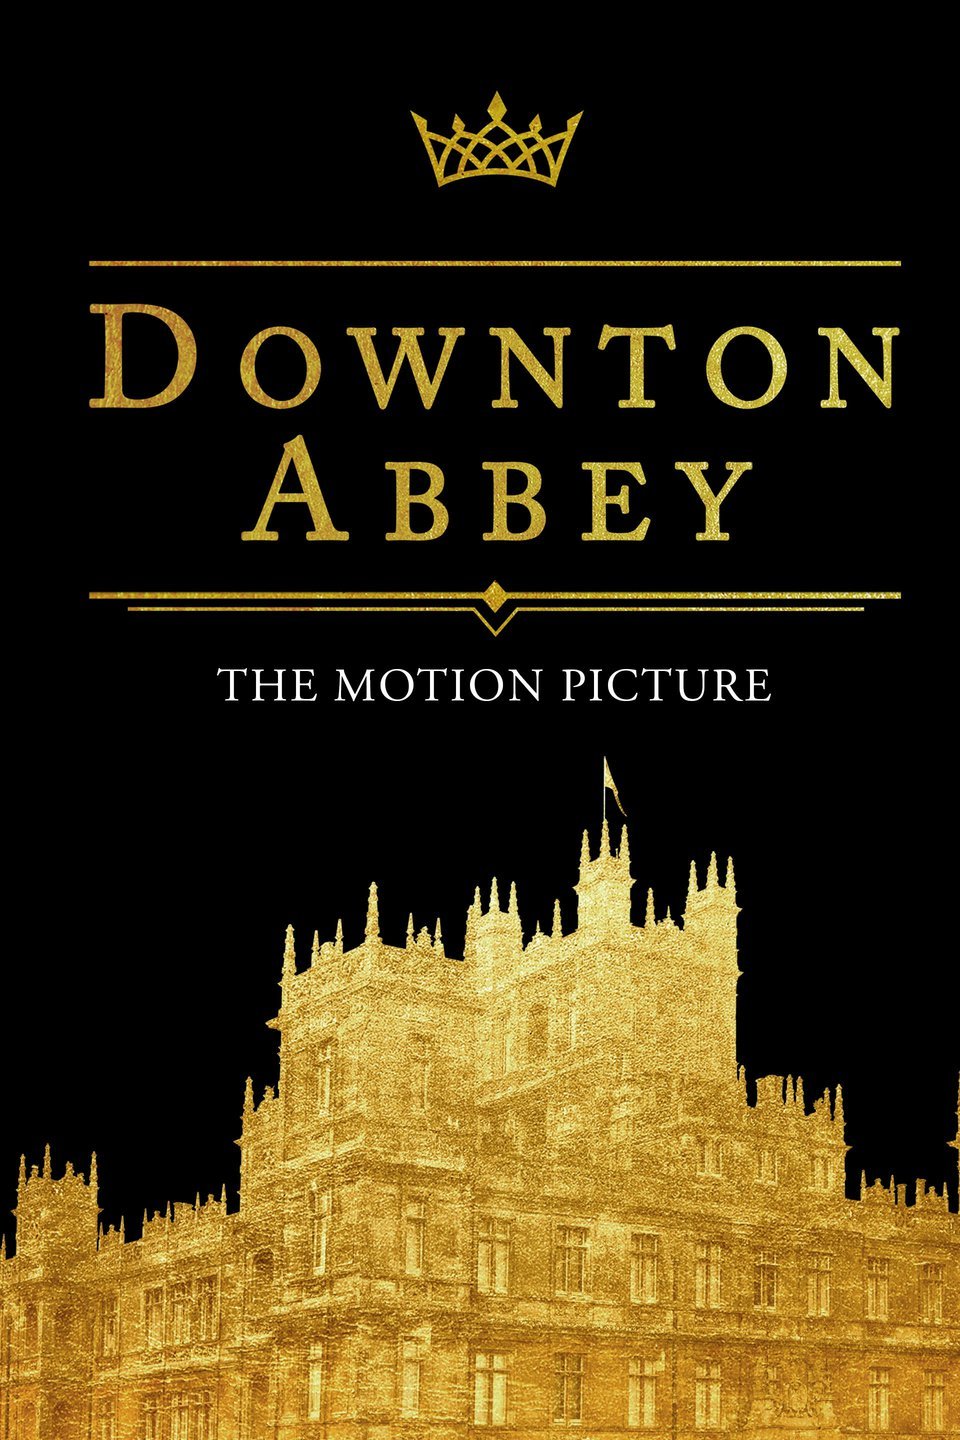 [MINI Super-HQ] Downton Abbey (2019) ดาวน์ตัน แอบบีย์ เดอะ มูฟวี่ [1080p] [พากย์อังกฤษ DTS] [Soundtrack บรรยายไทย + อังกฤษ] [เสียงอังกฤษ + ซับไทย]